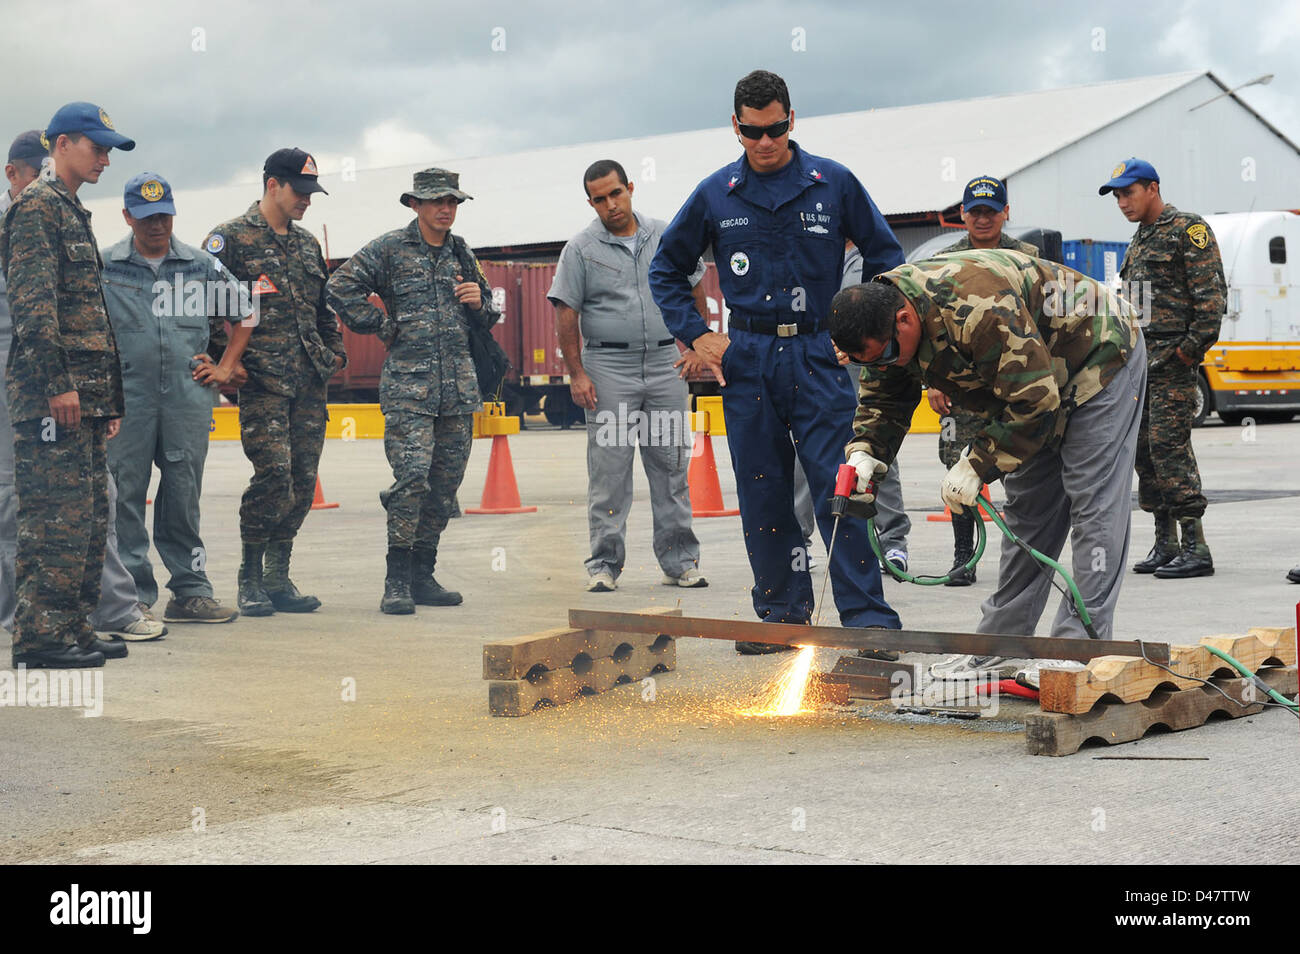 A U.S. Navy diver observes a Guatemalan diver cutting metal. Stock Photo